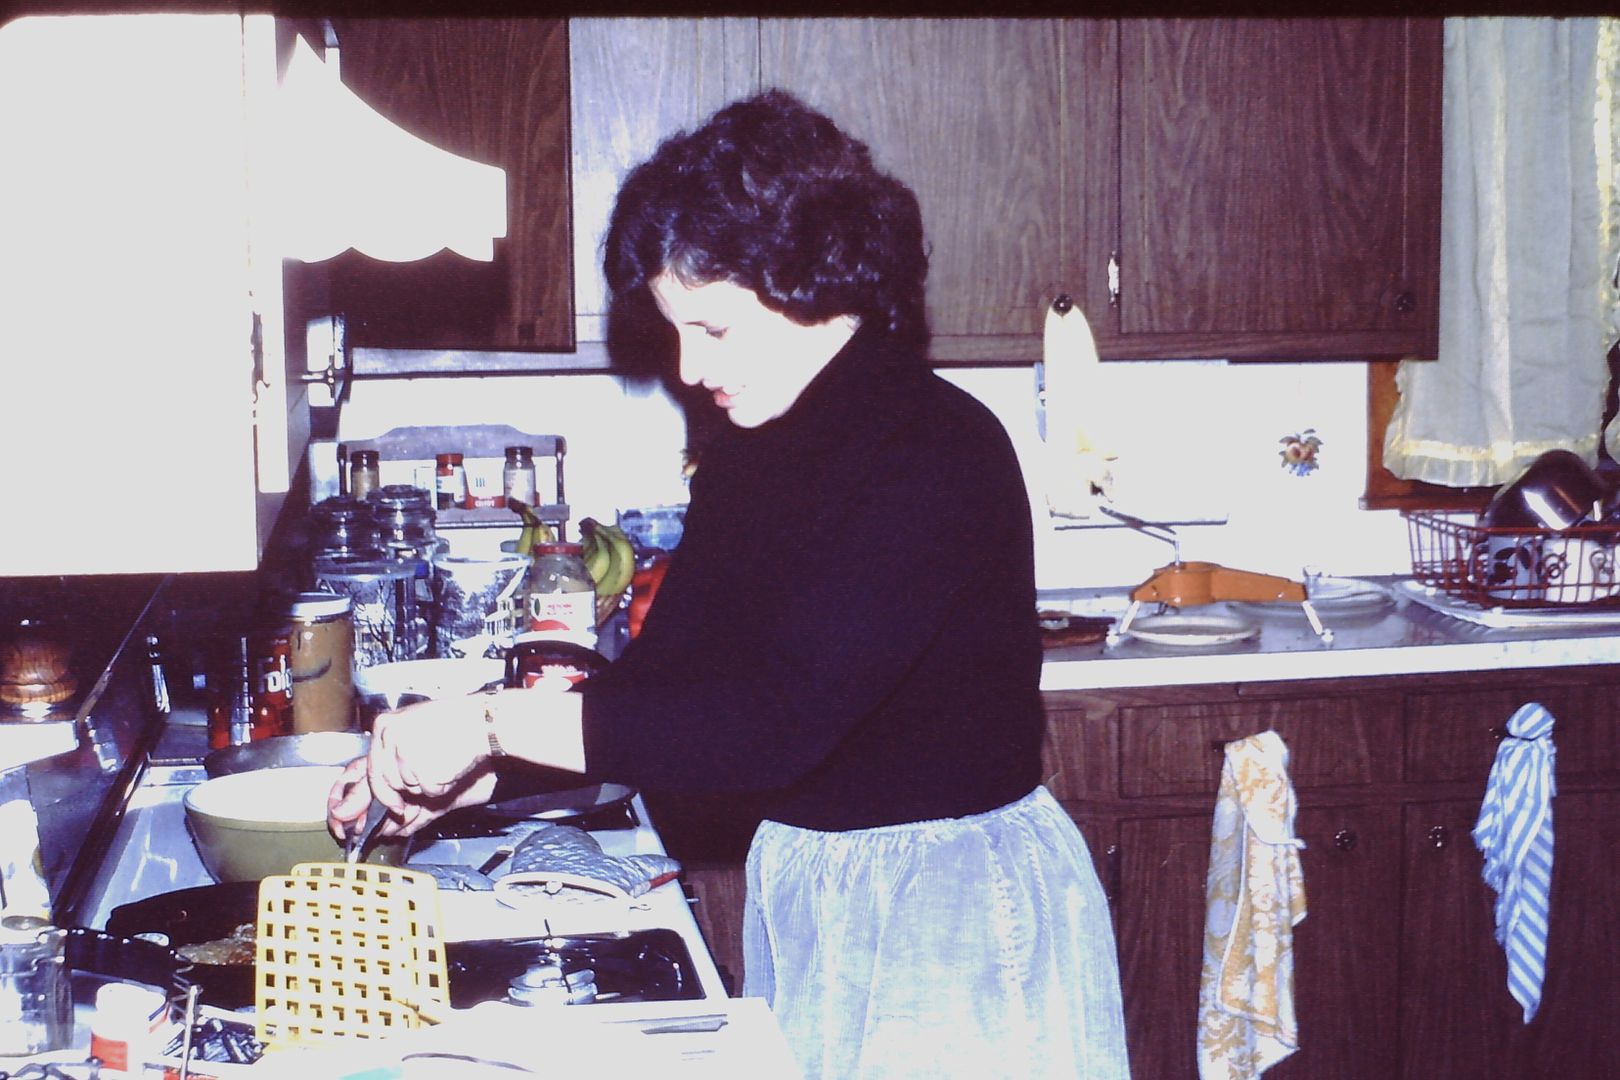 Nancy in kitchen